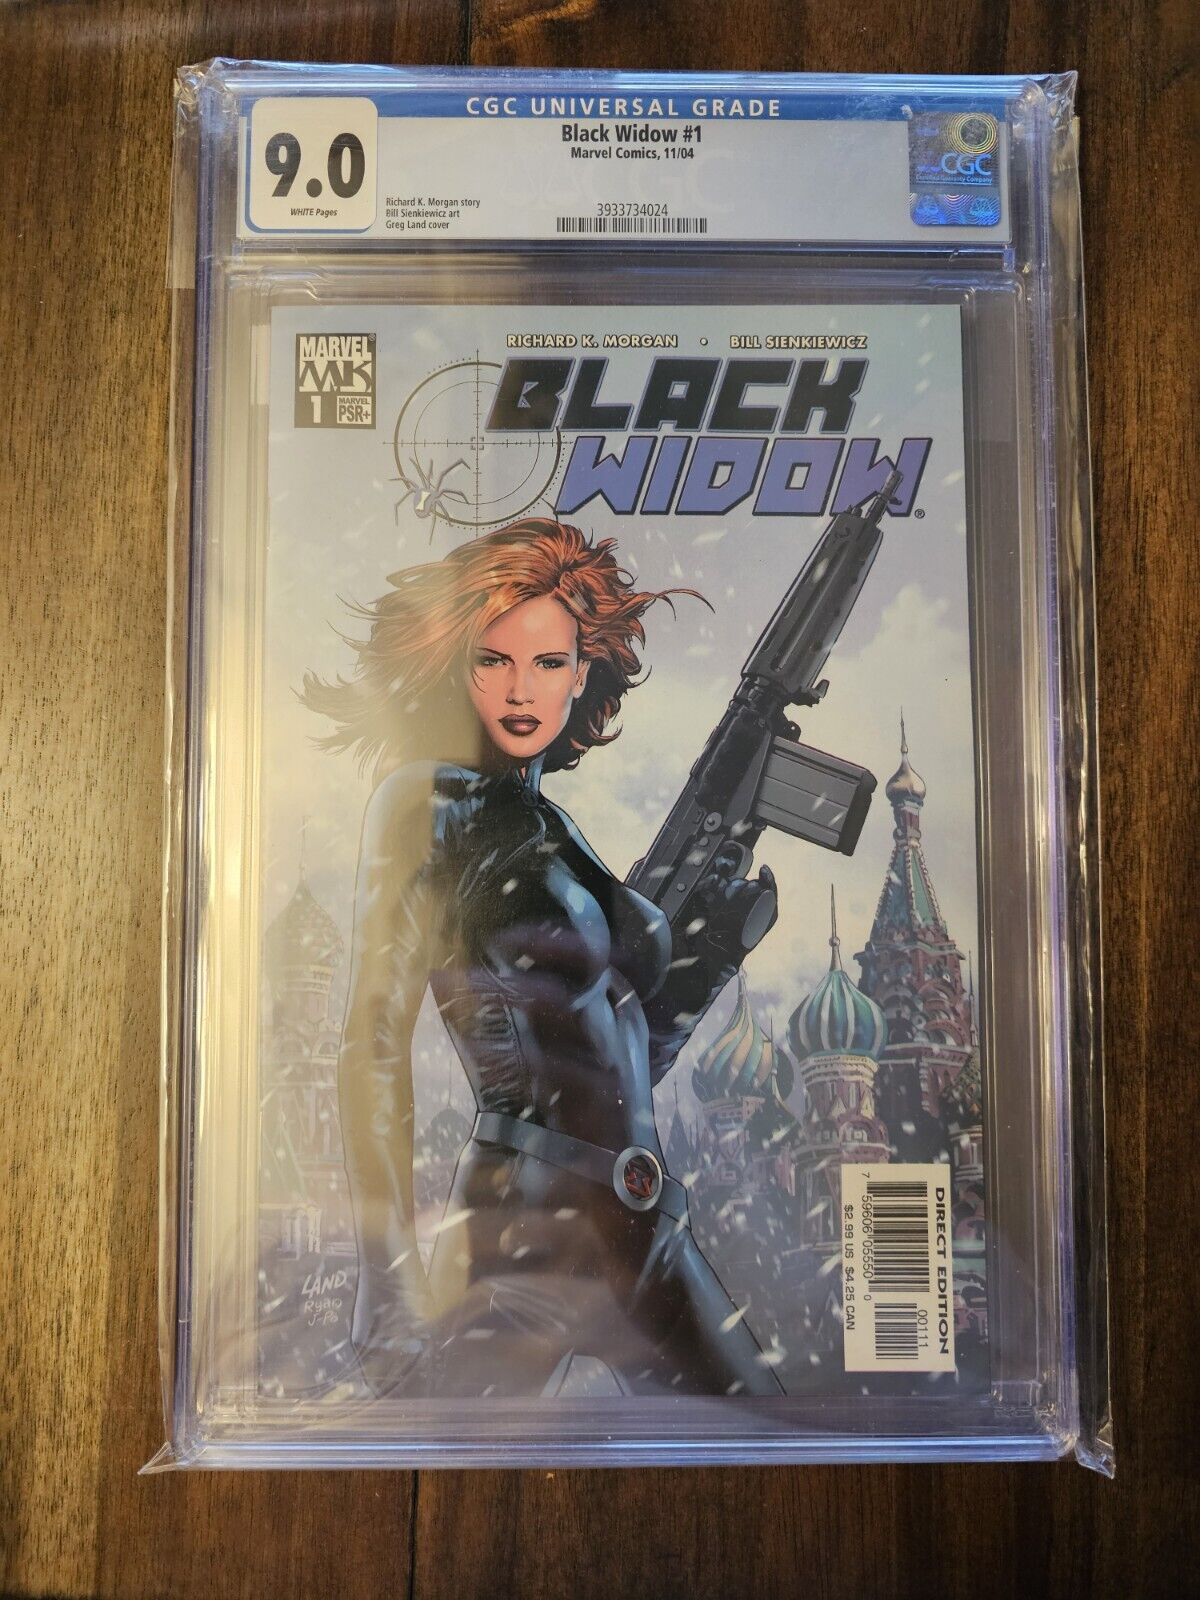 Black Widow #1 CGC 9.0 (2004) Greg Land Cover Marvel Comics MK